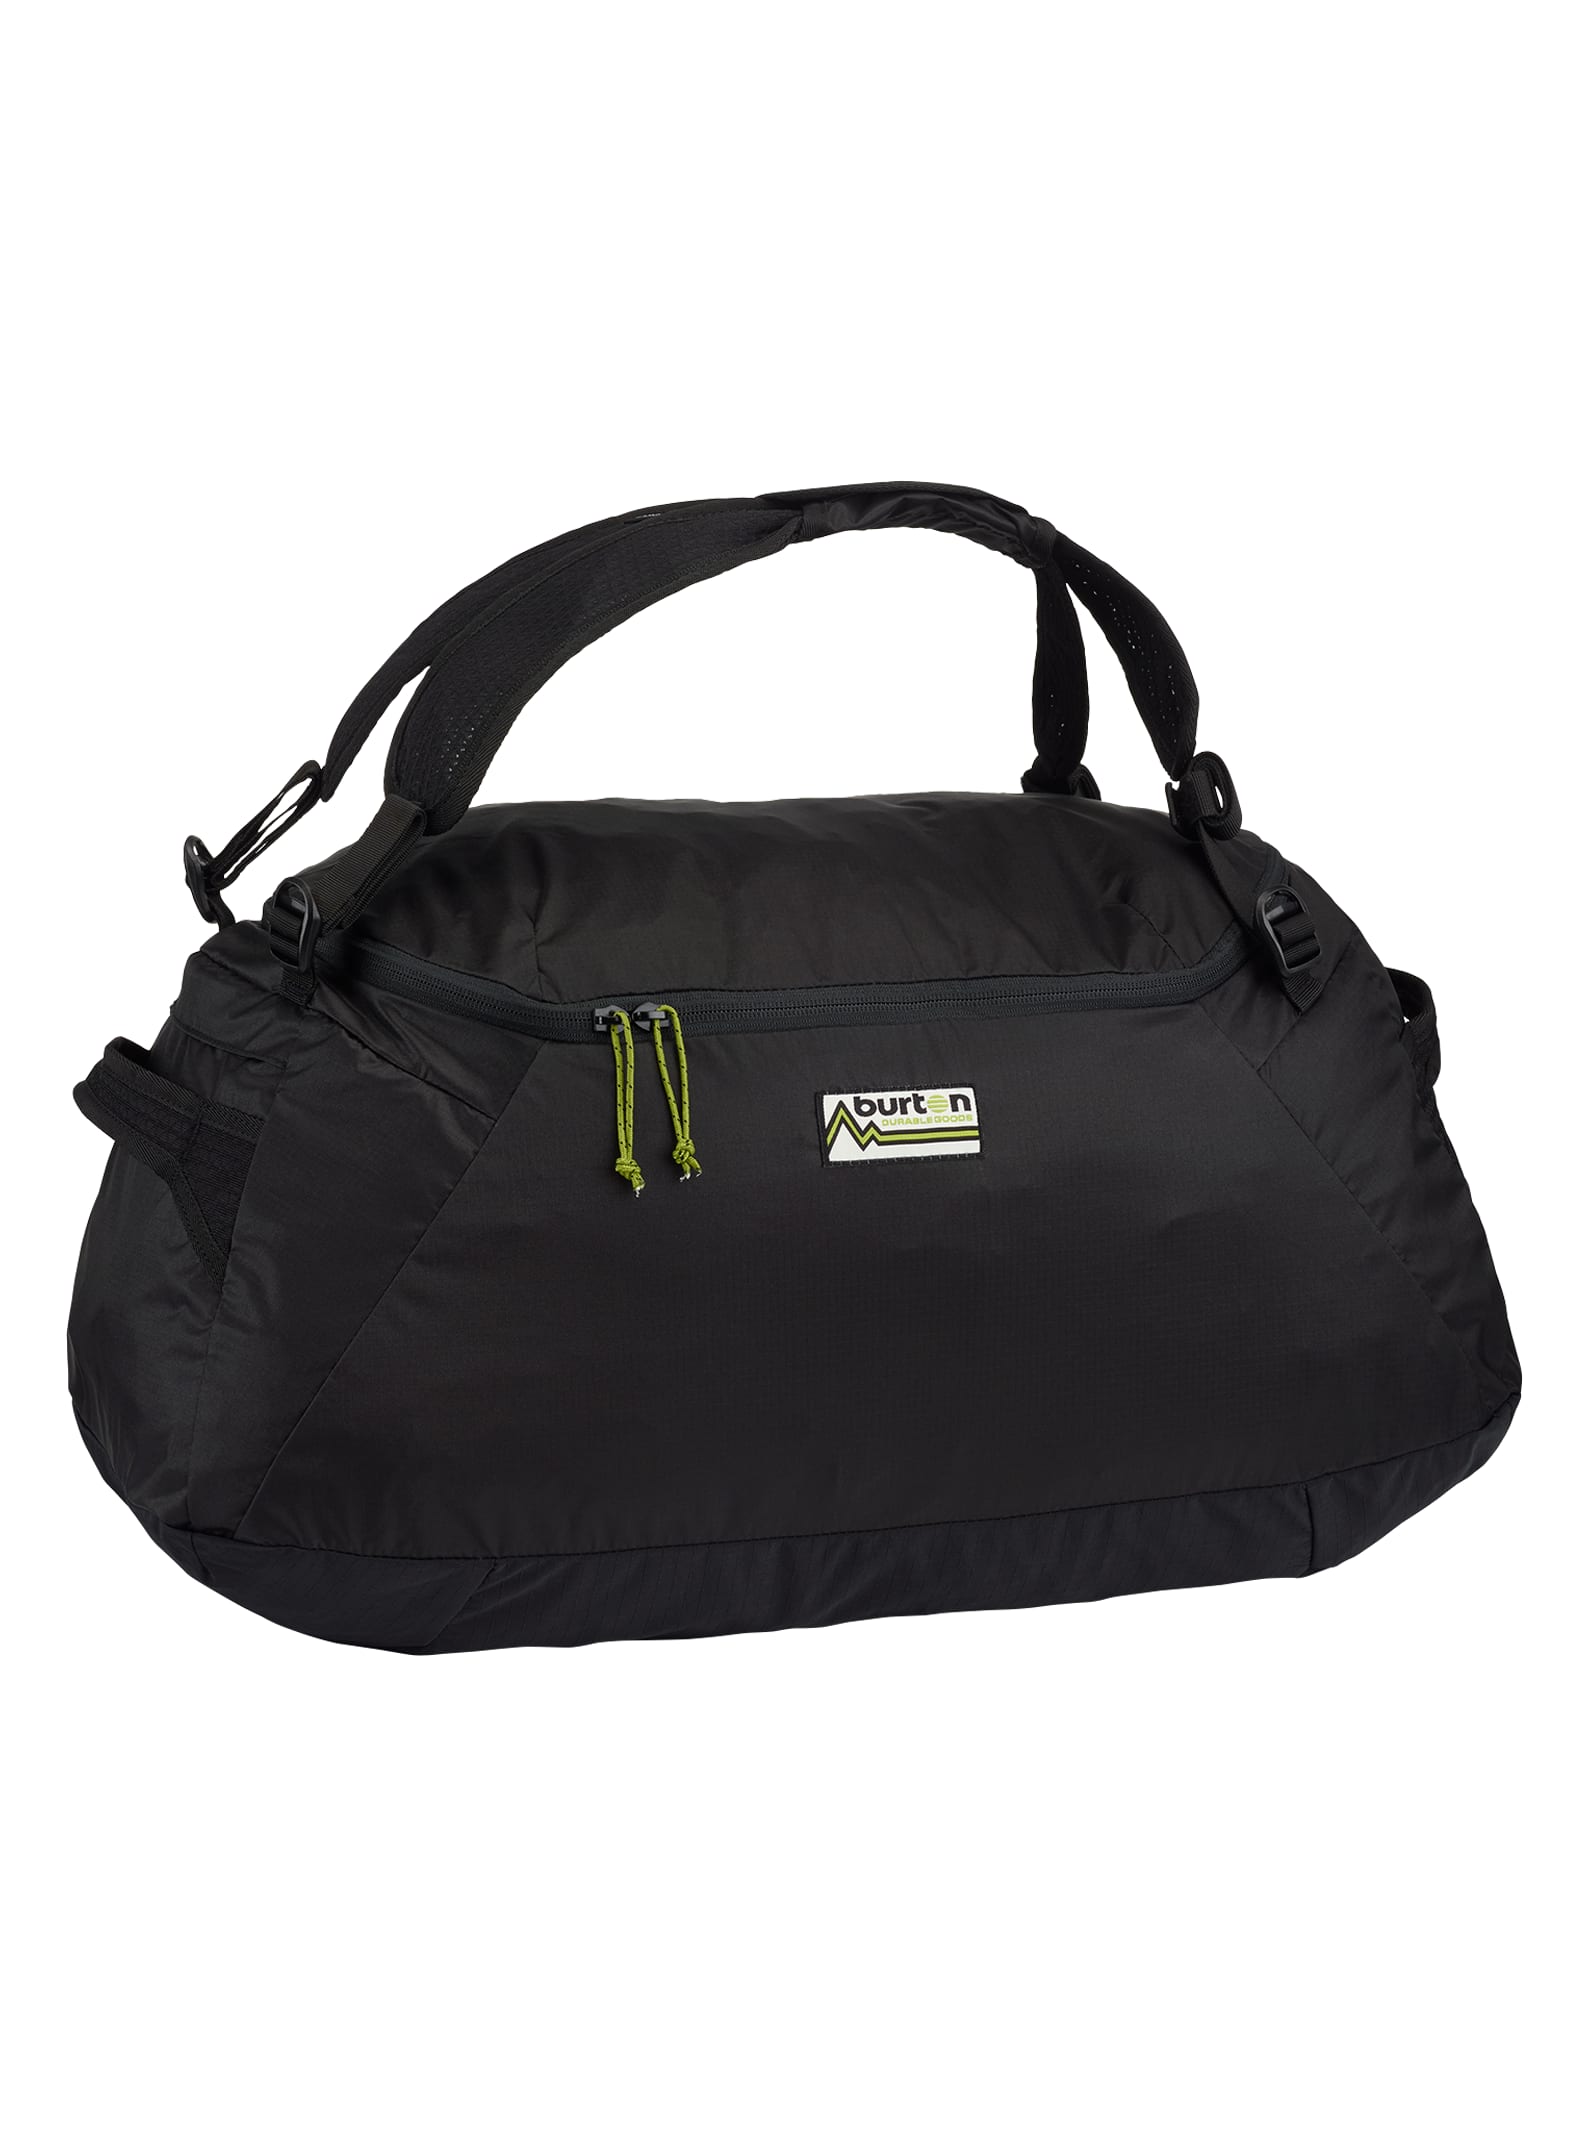 Burton Multipath 40L Packable Duffel Bag | Burton.com Spring 2022 AU